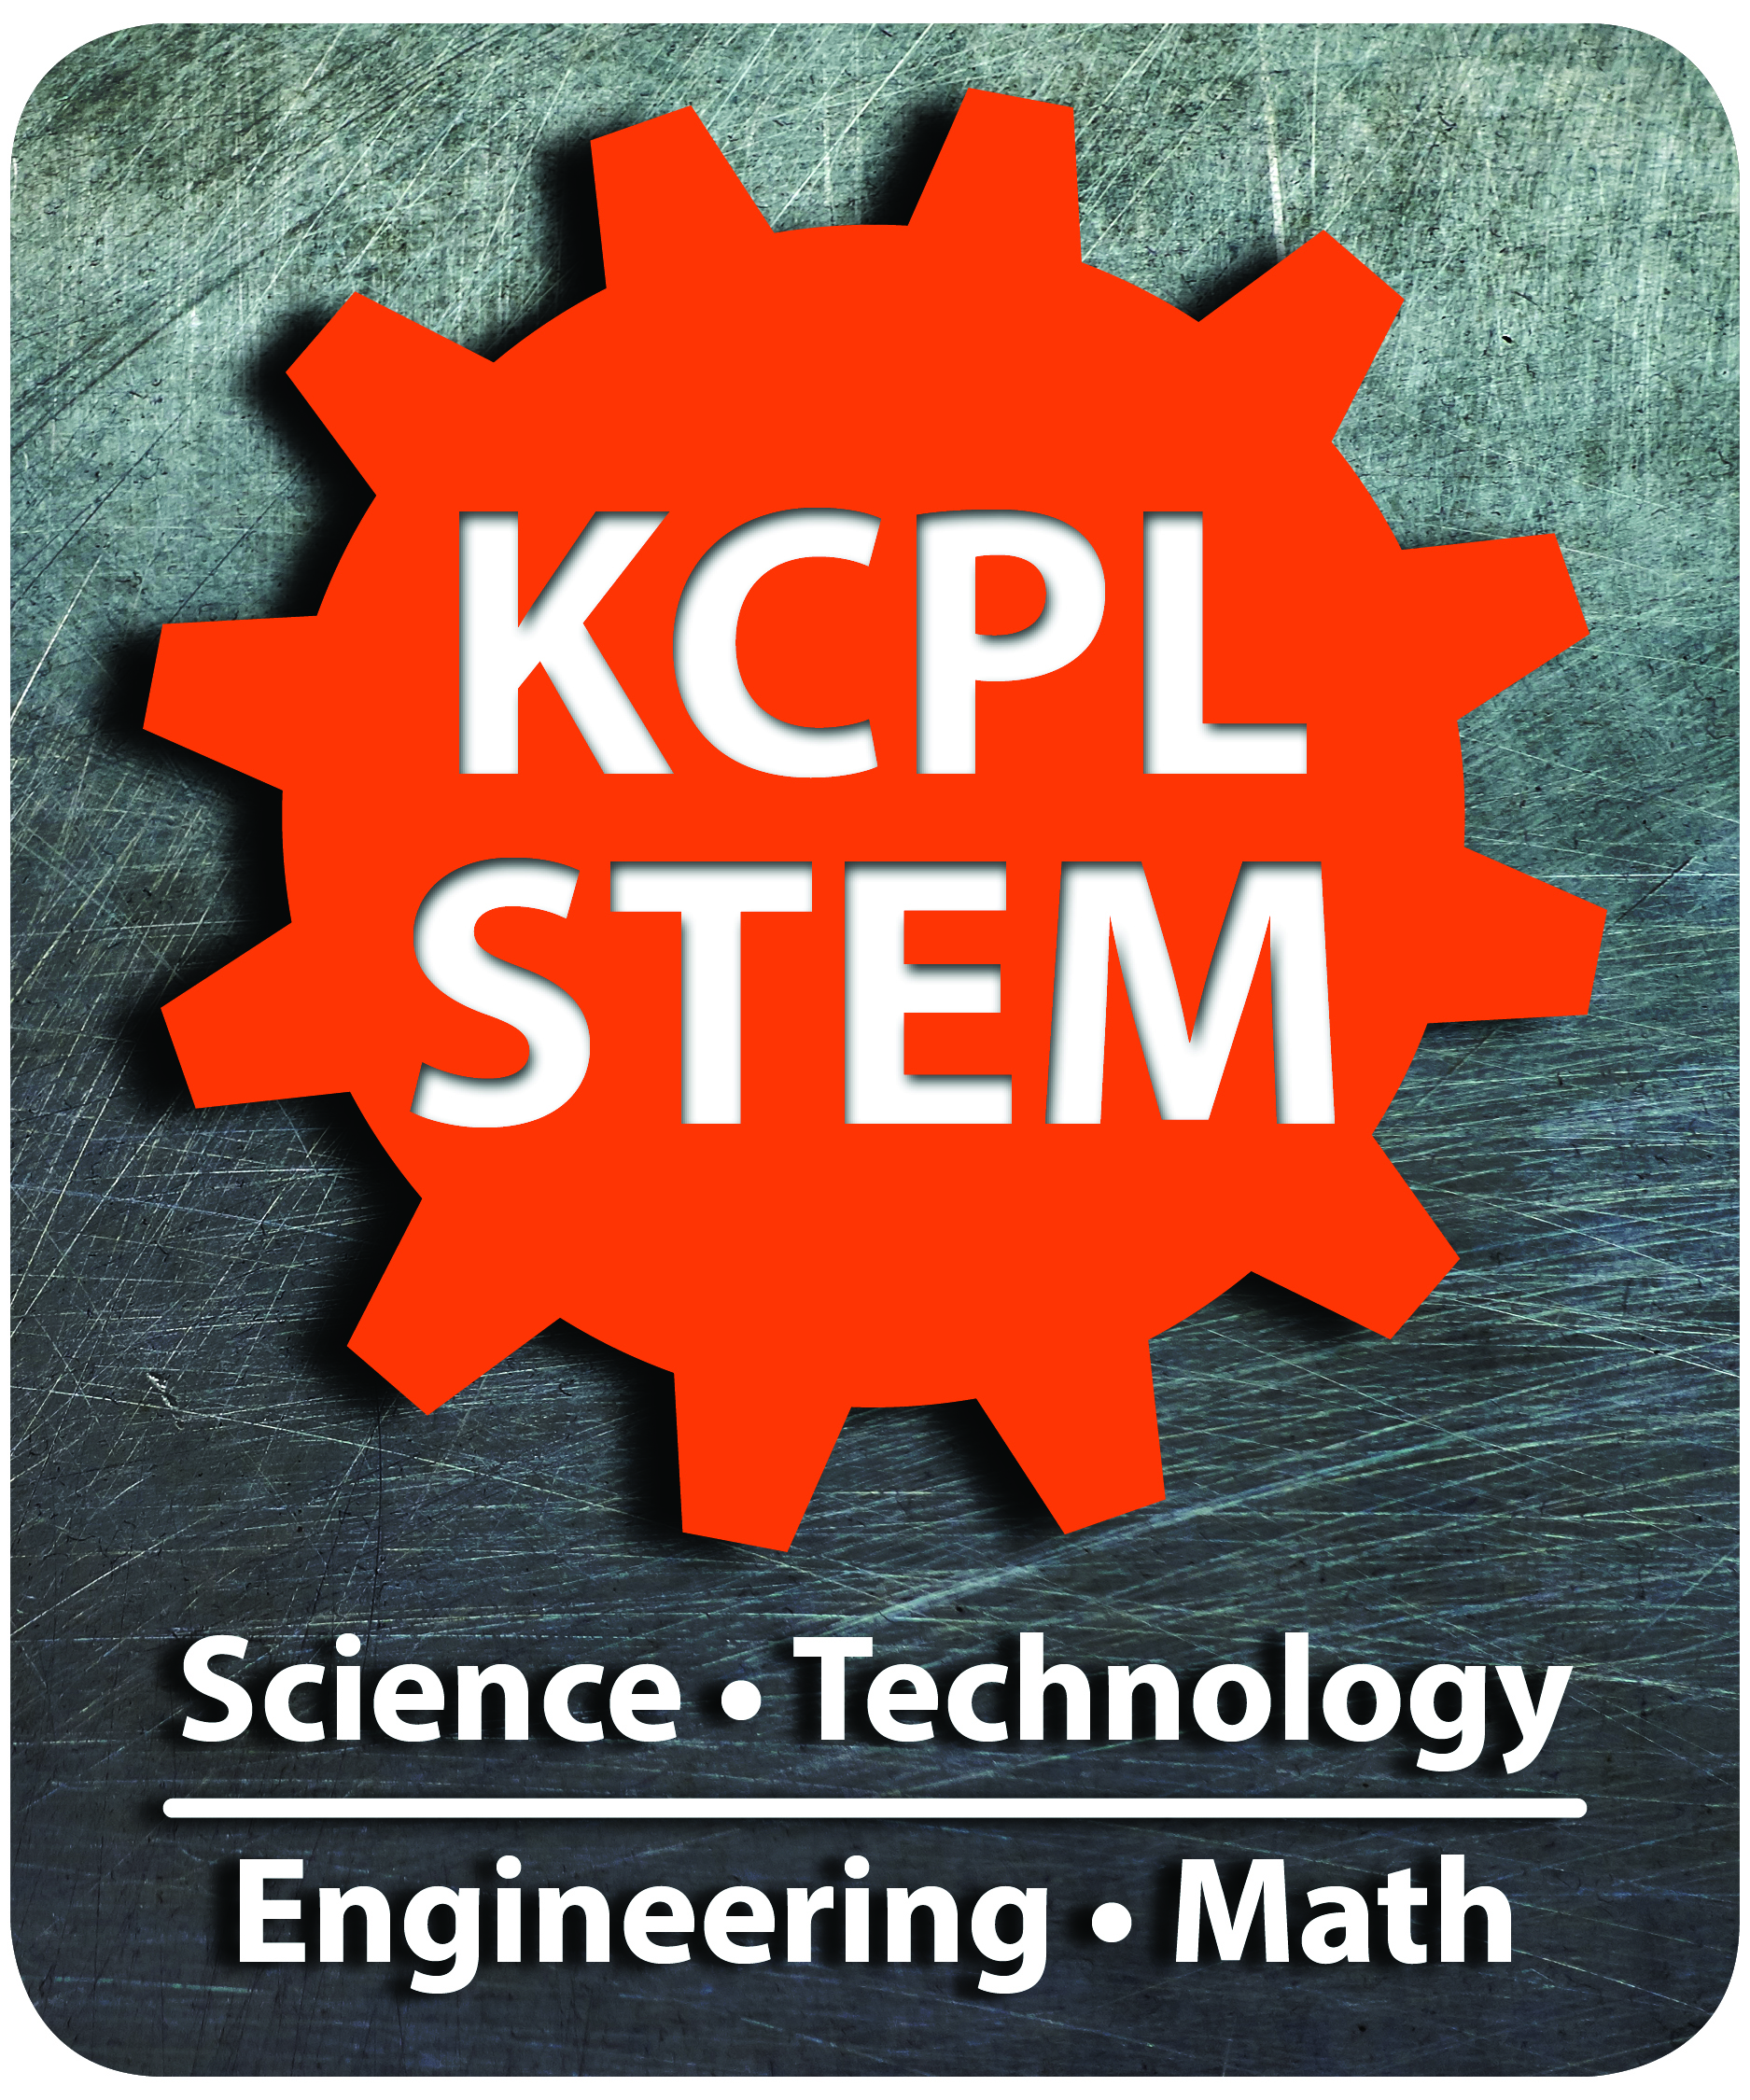 KCPL STEM logo